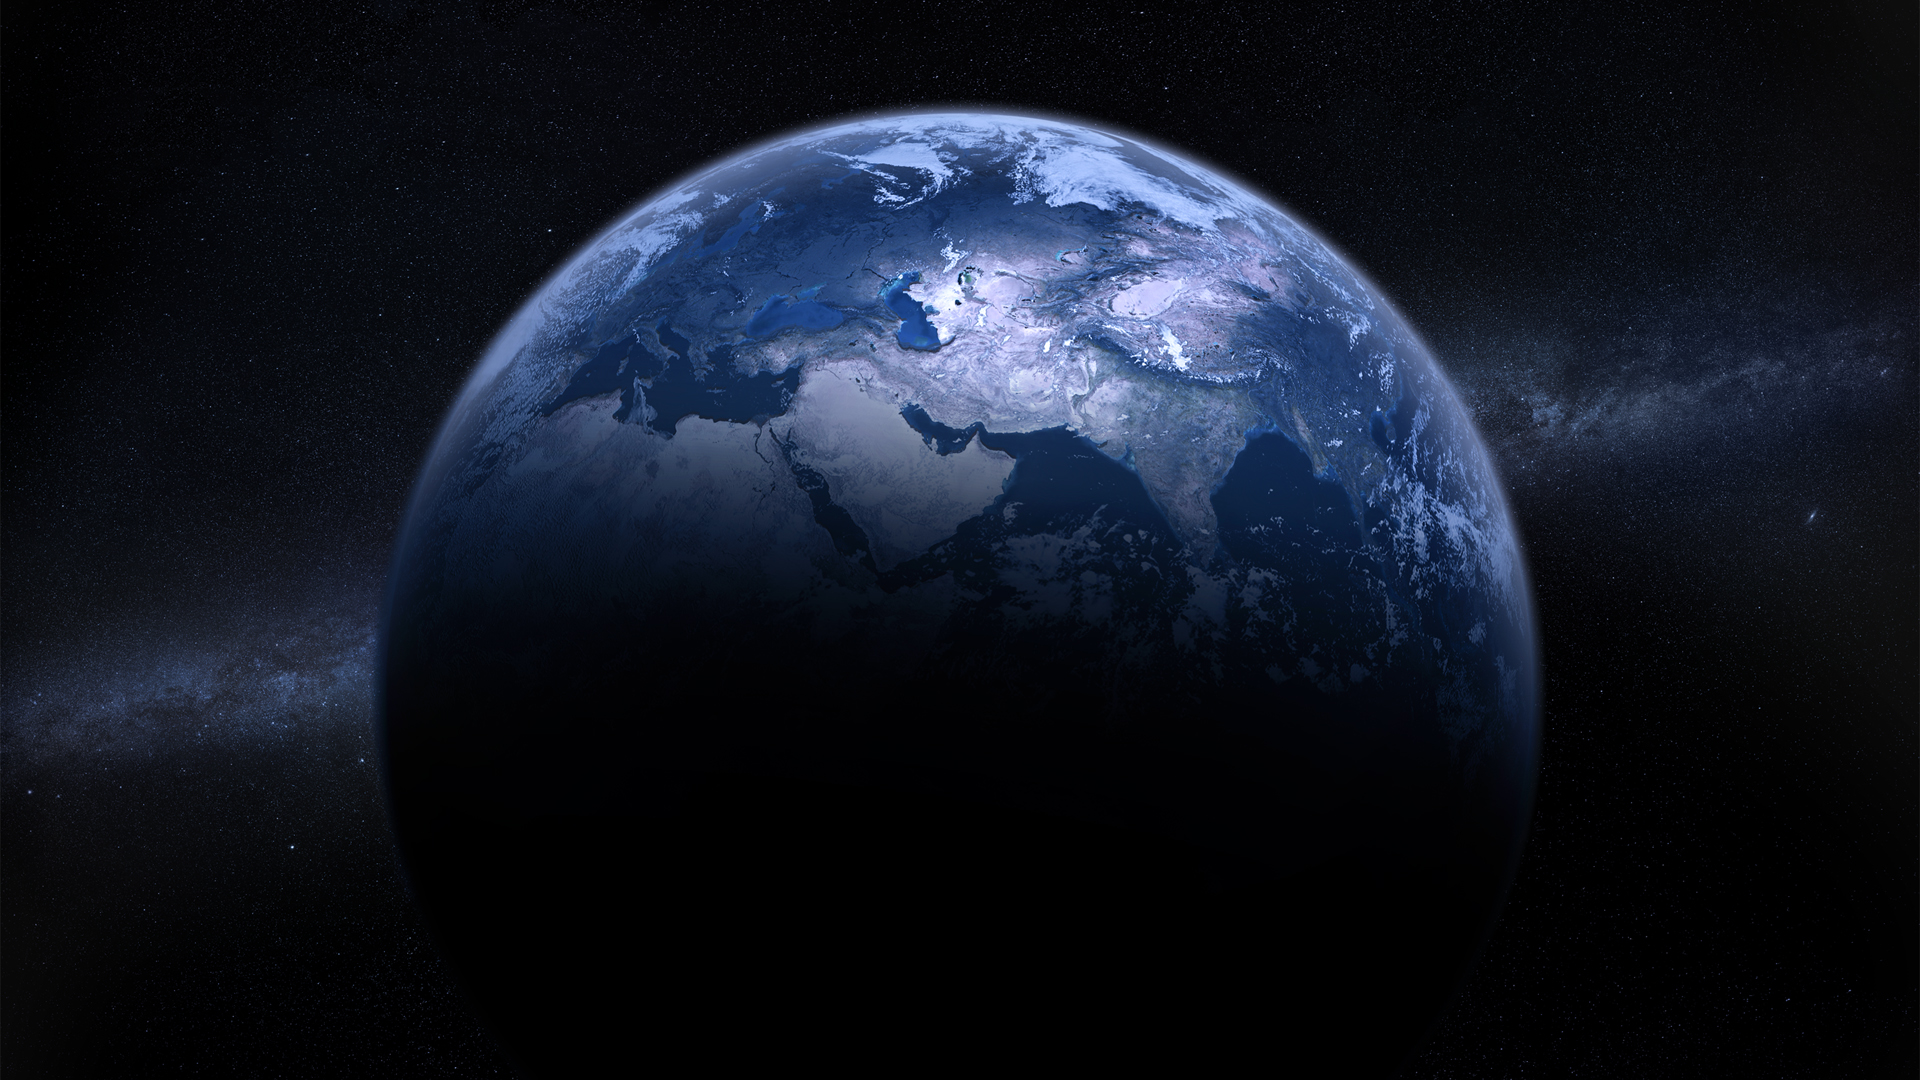 fondos de pantalla oscuro hd,planeta,tierra,atmósfera,objeto astronómico,espacio exterior